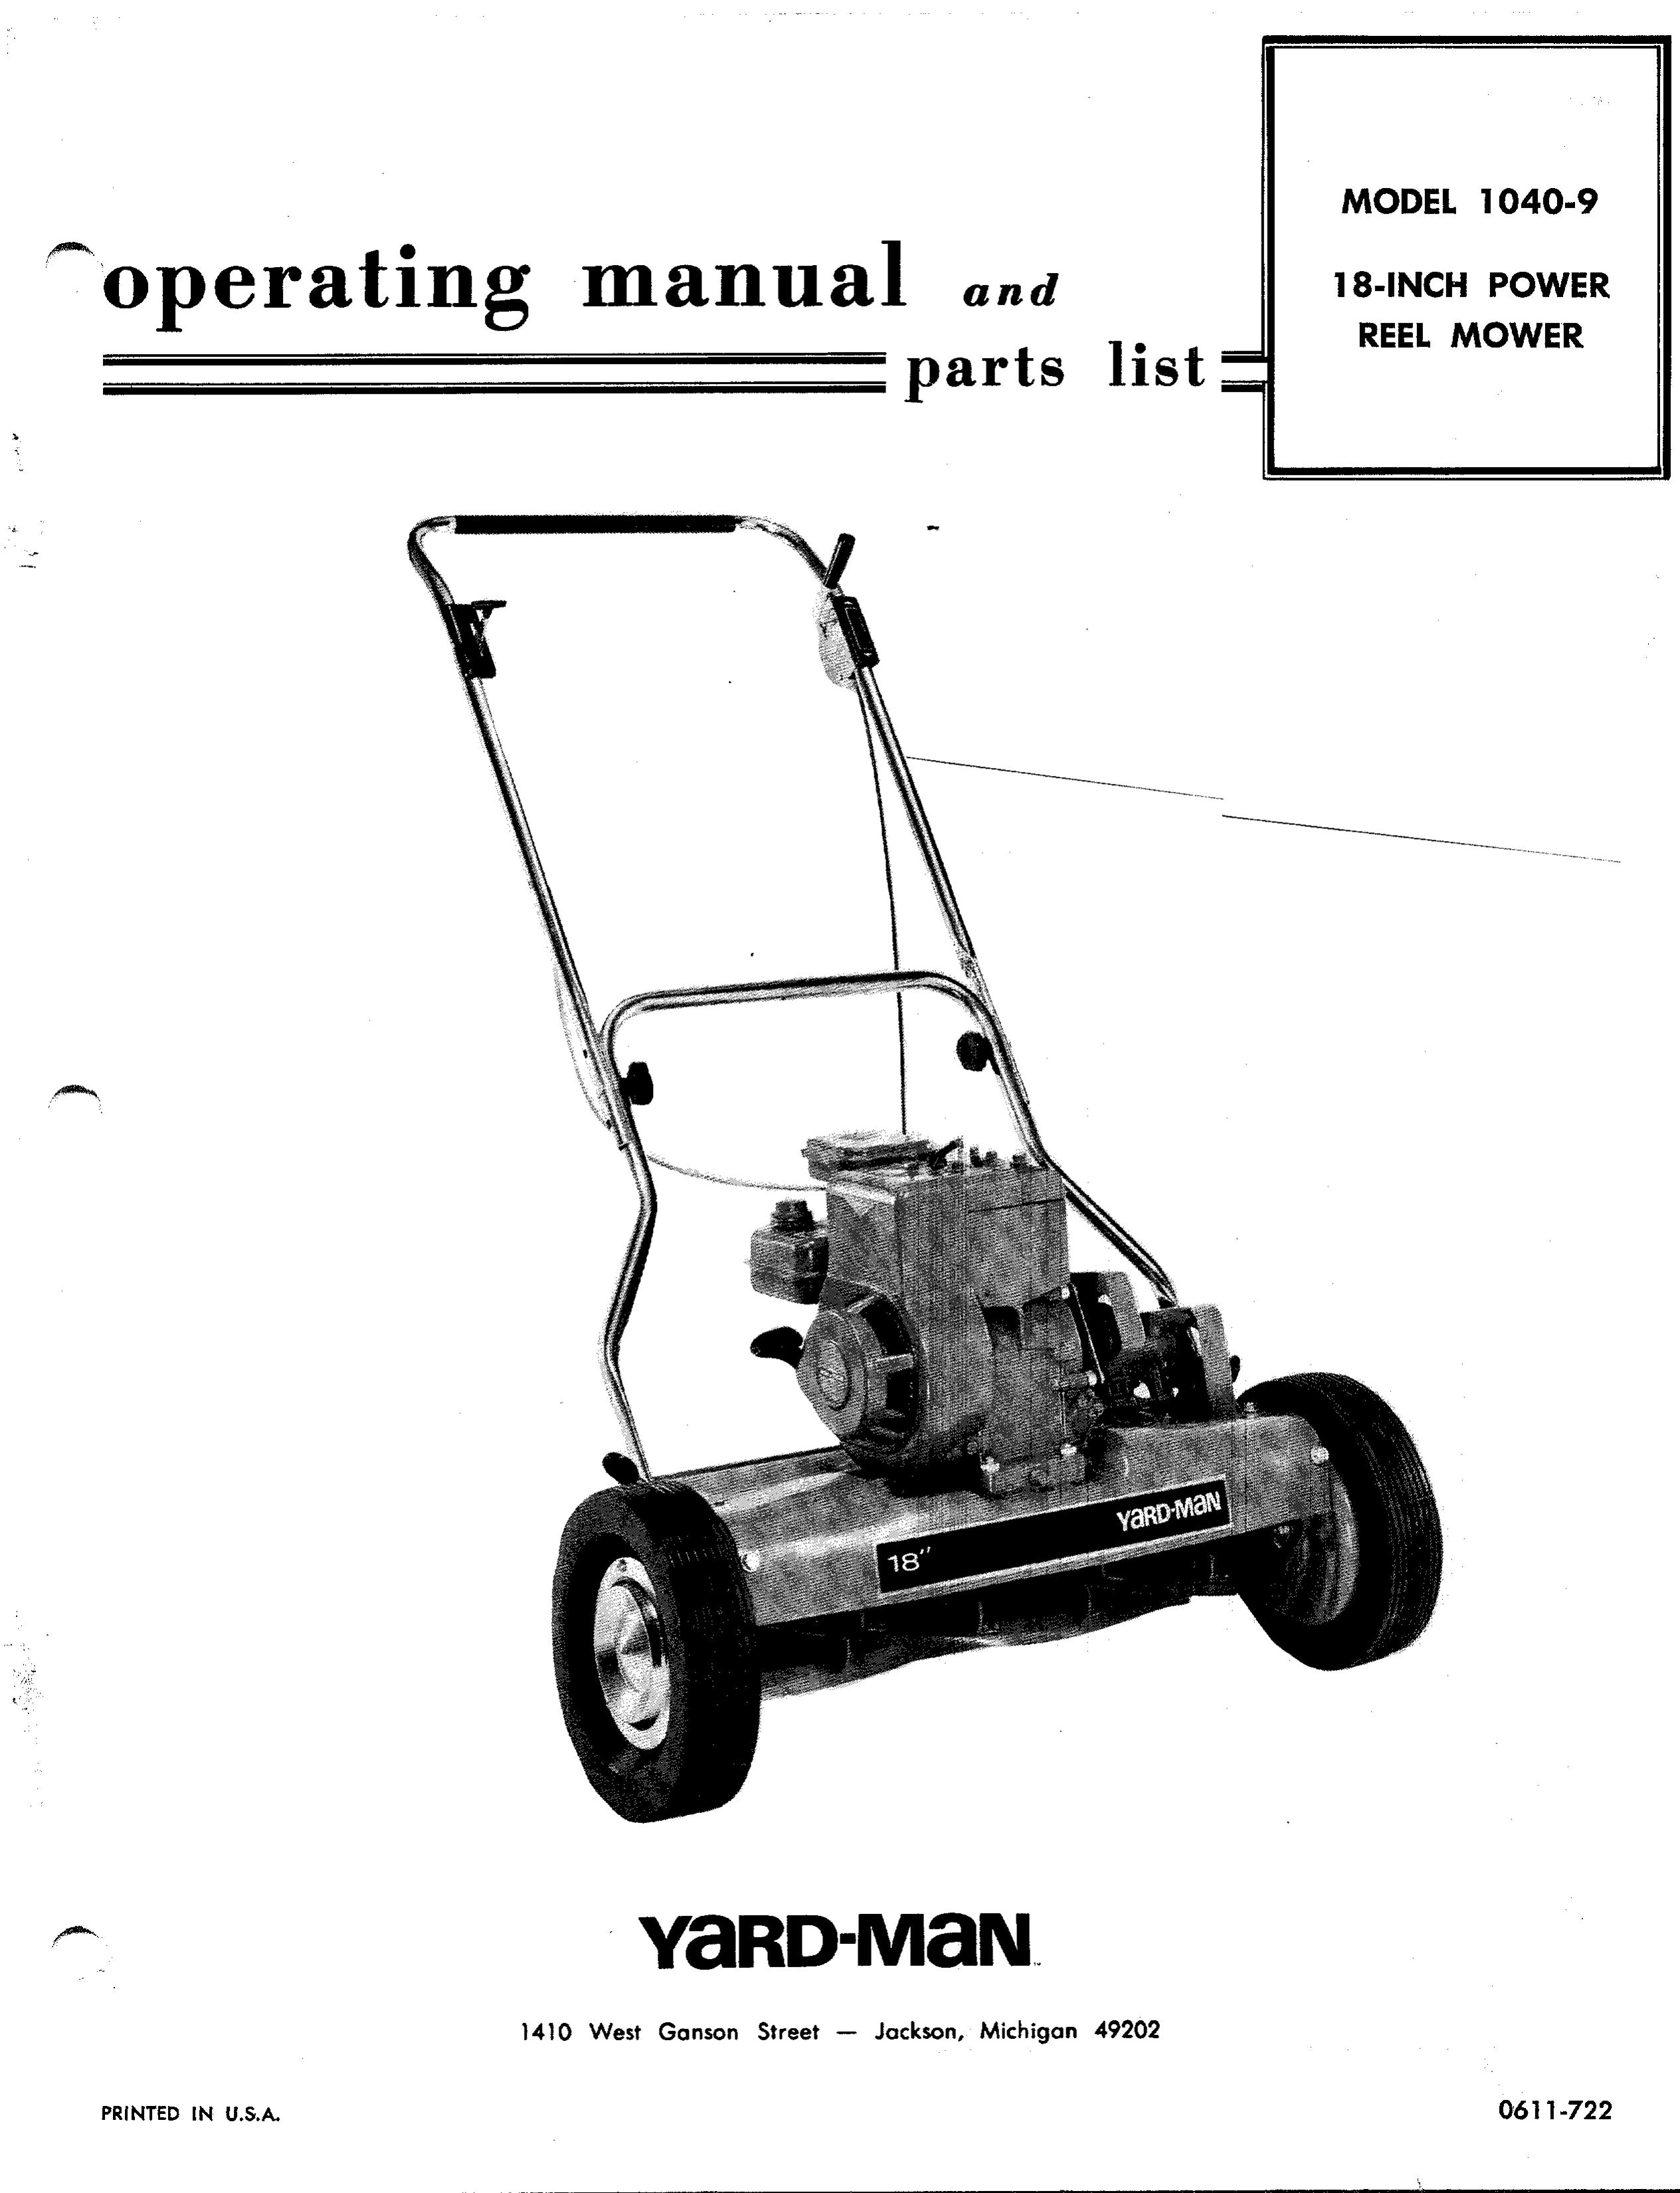 Yard-Man 1040-9 Lawn Mower User Manual